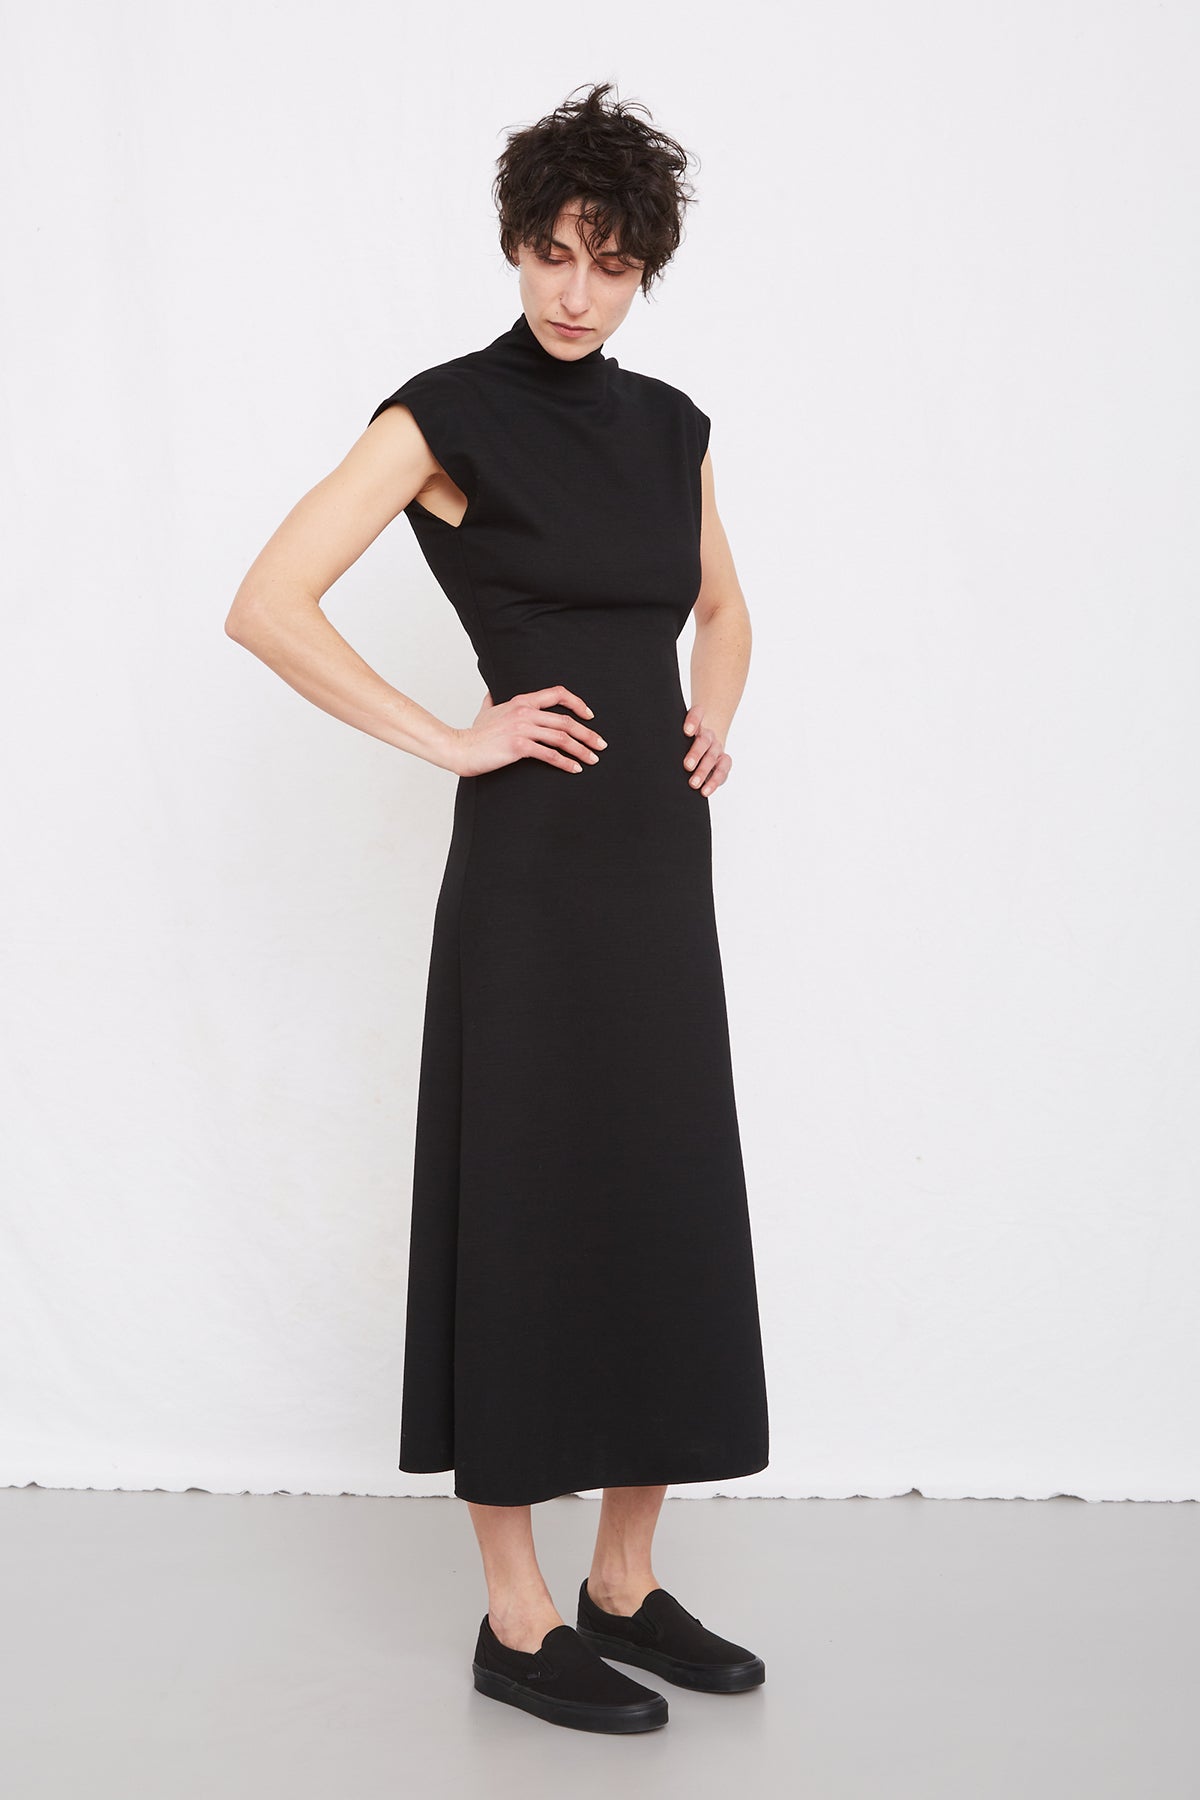  Black Wool Jersey Dress - GAUCHERE